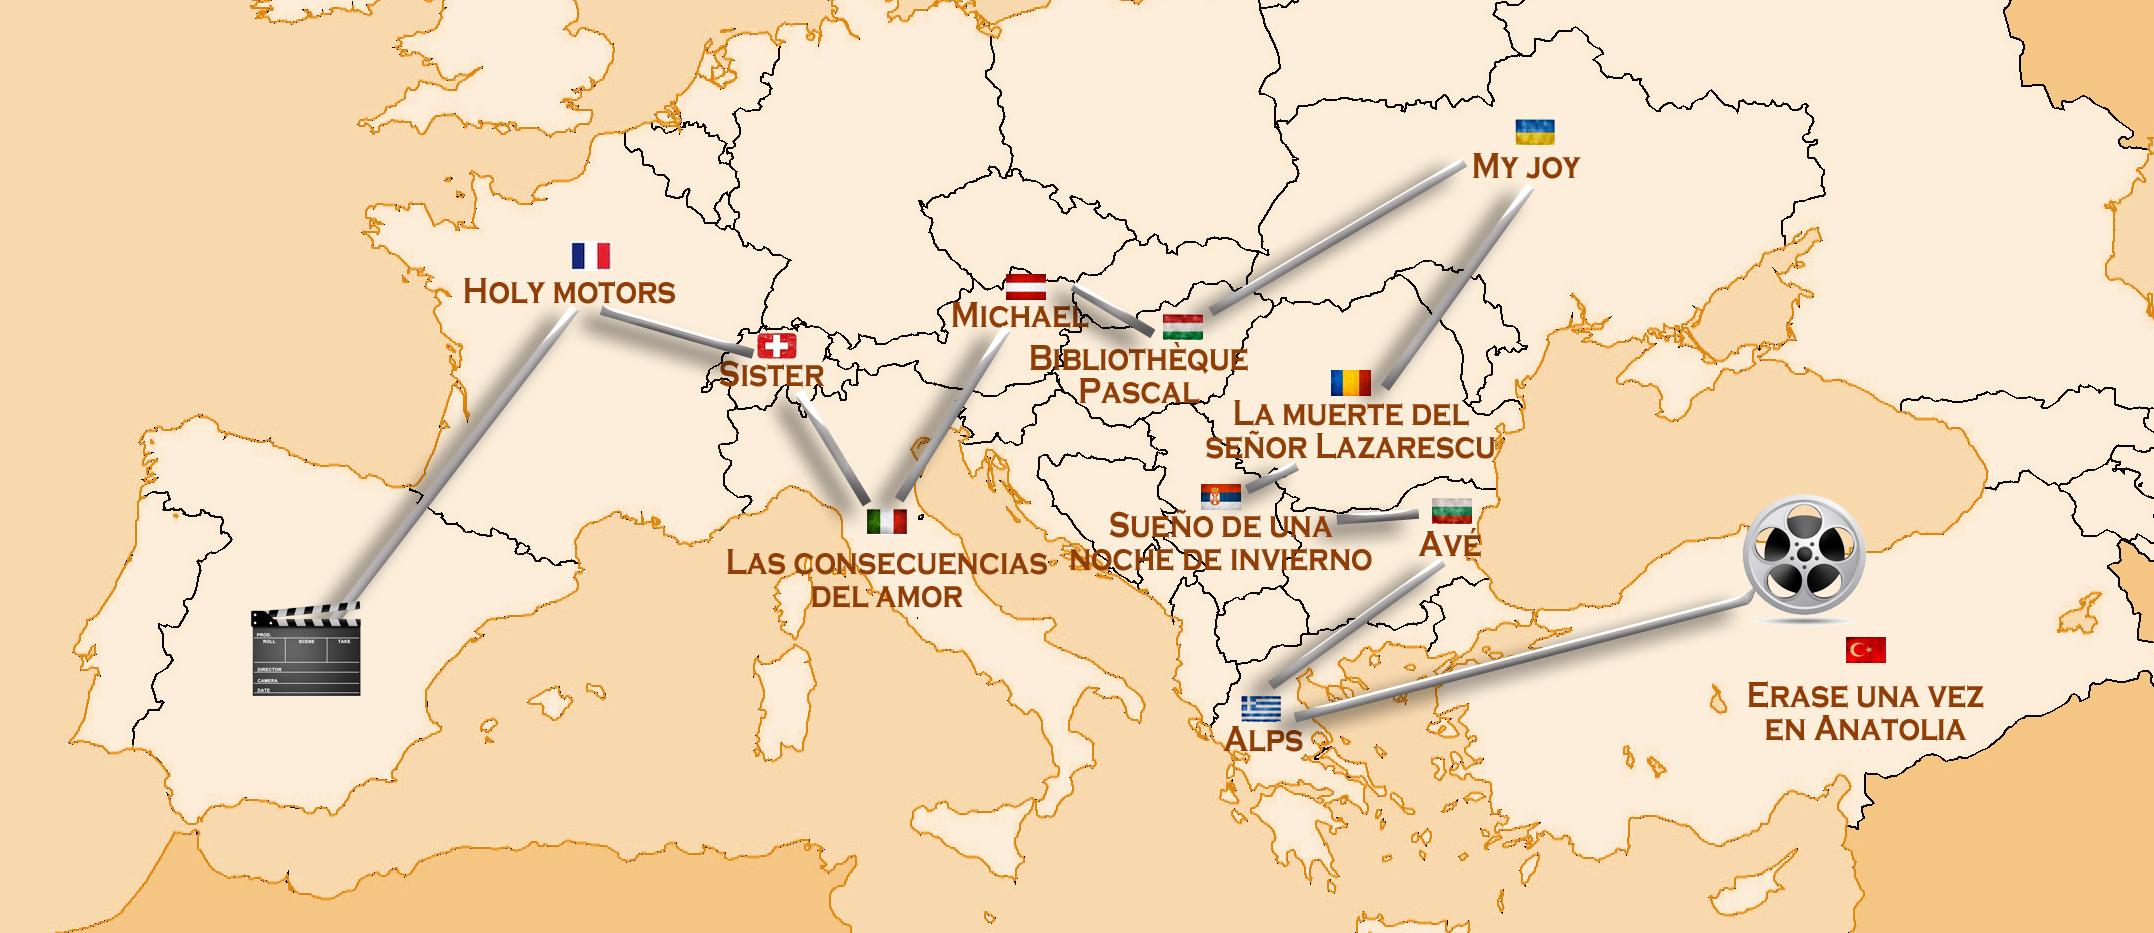 00000-mapa europa sur